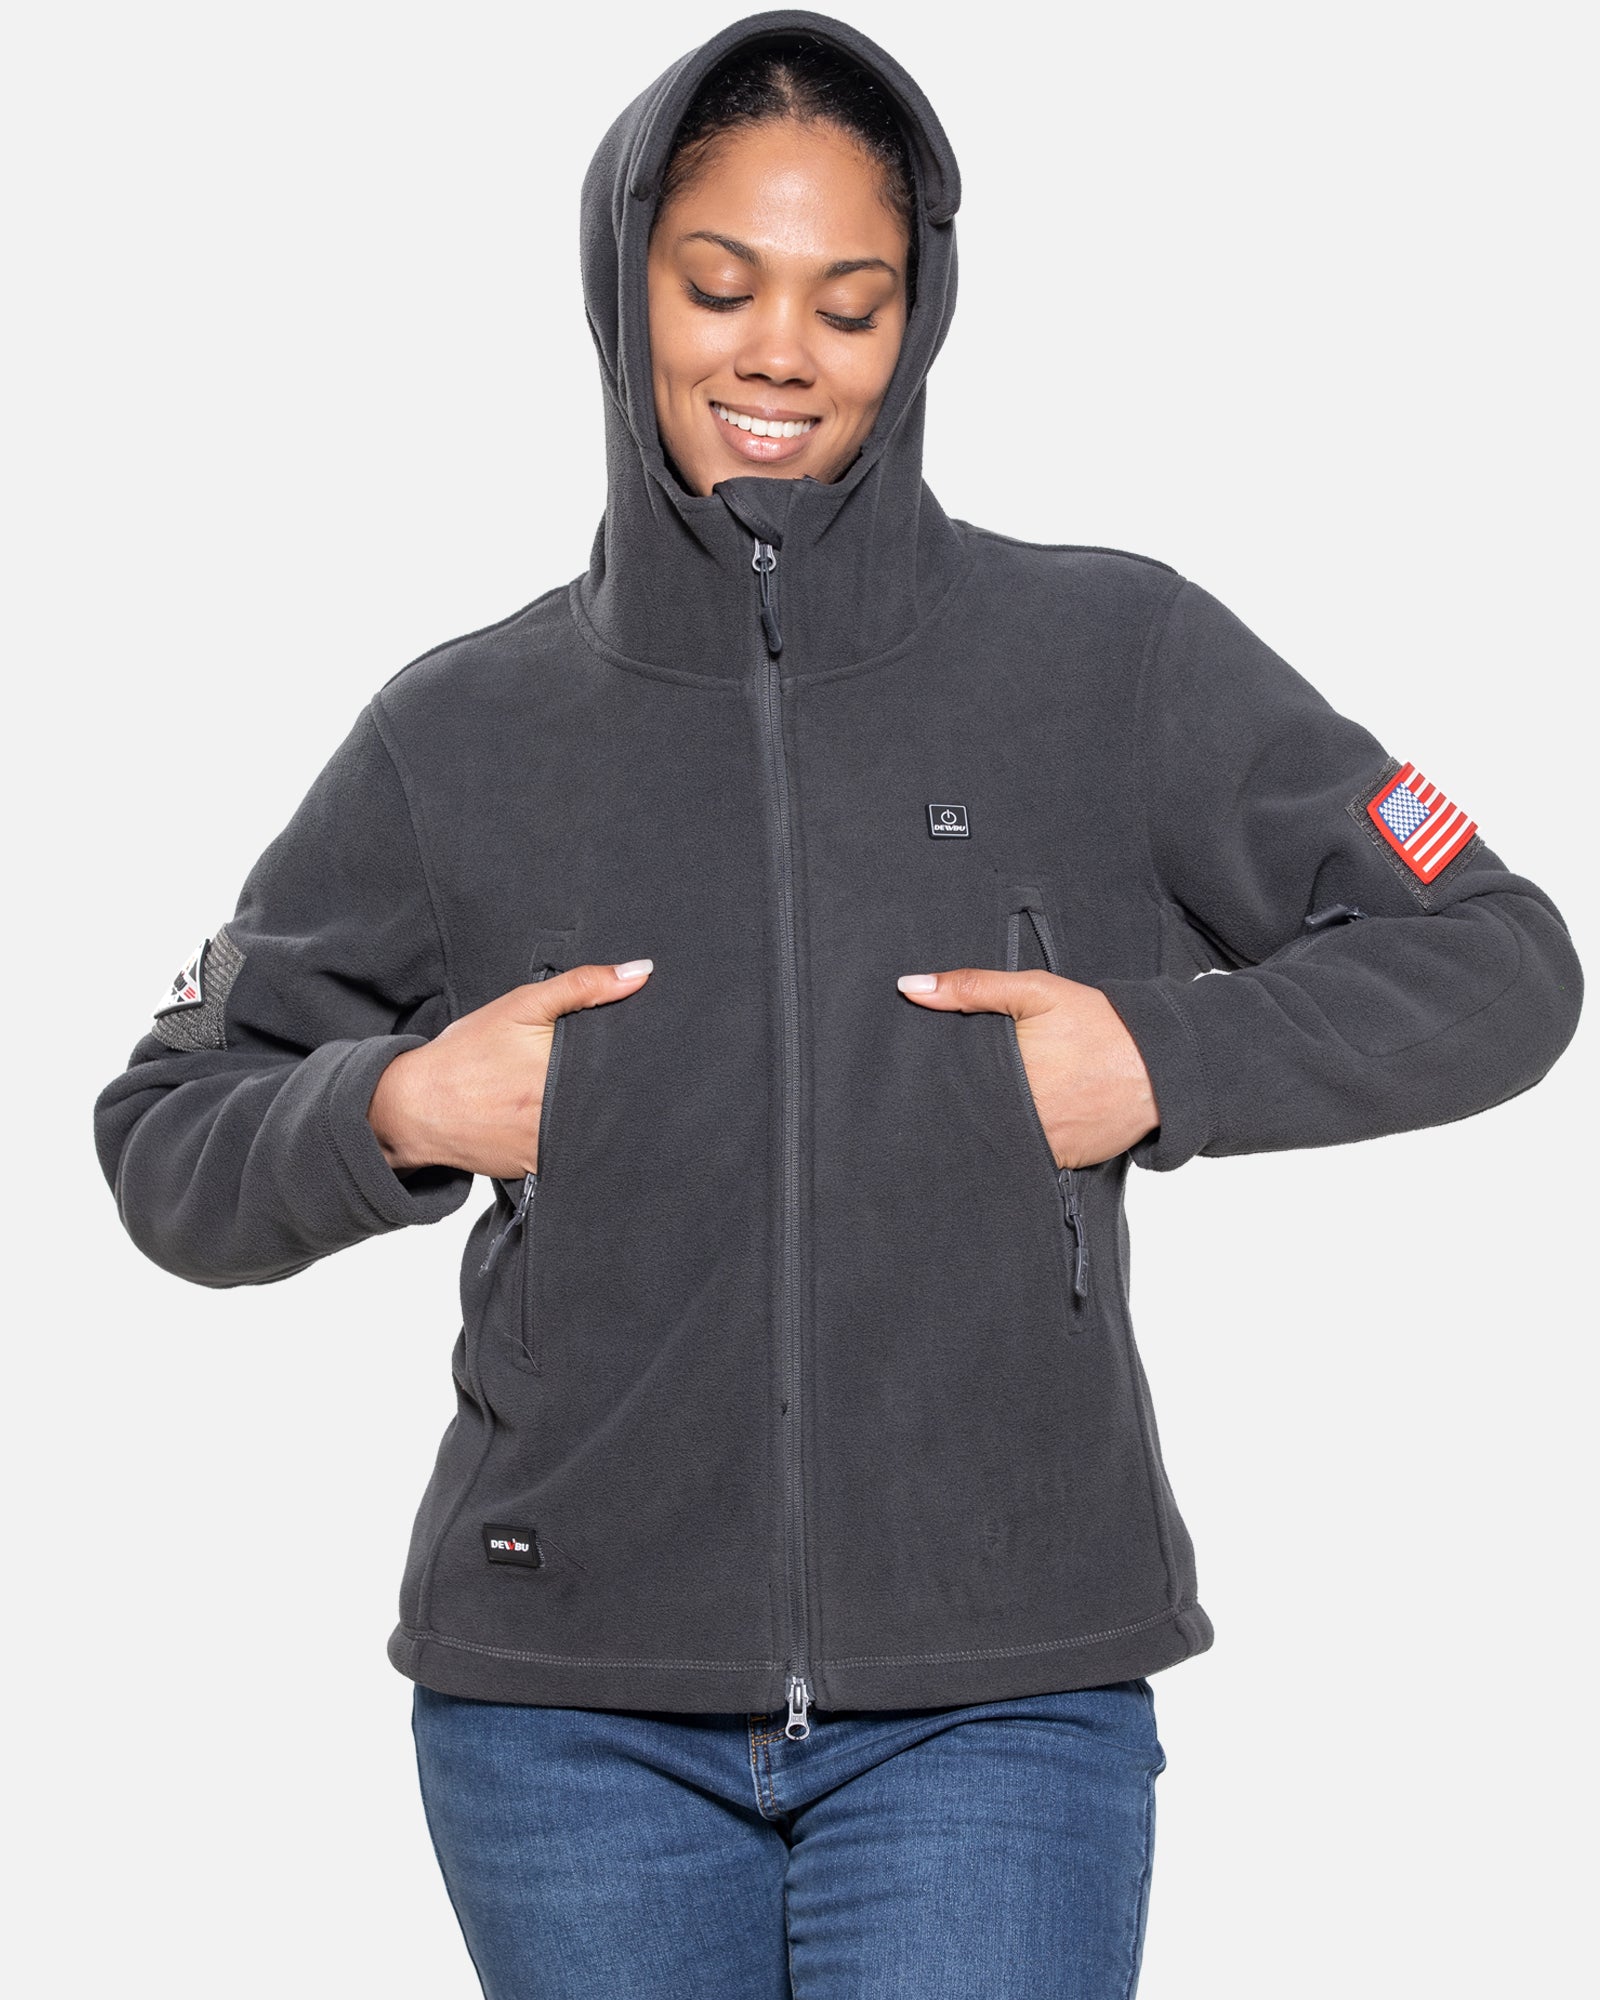 DEWBU® Women's Polar Fleece Heated Jacket With 12V Battery Pack - Grey